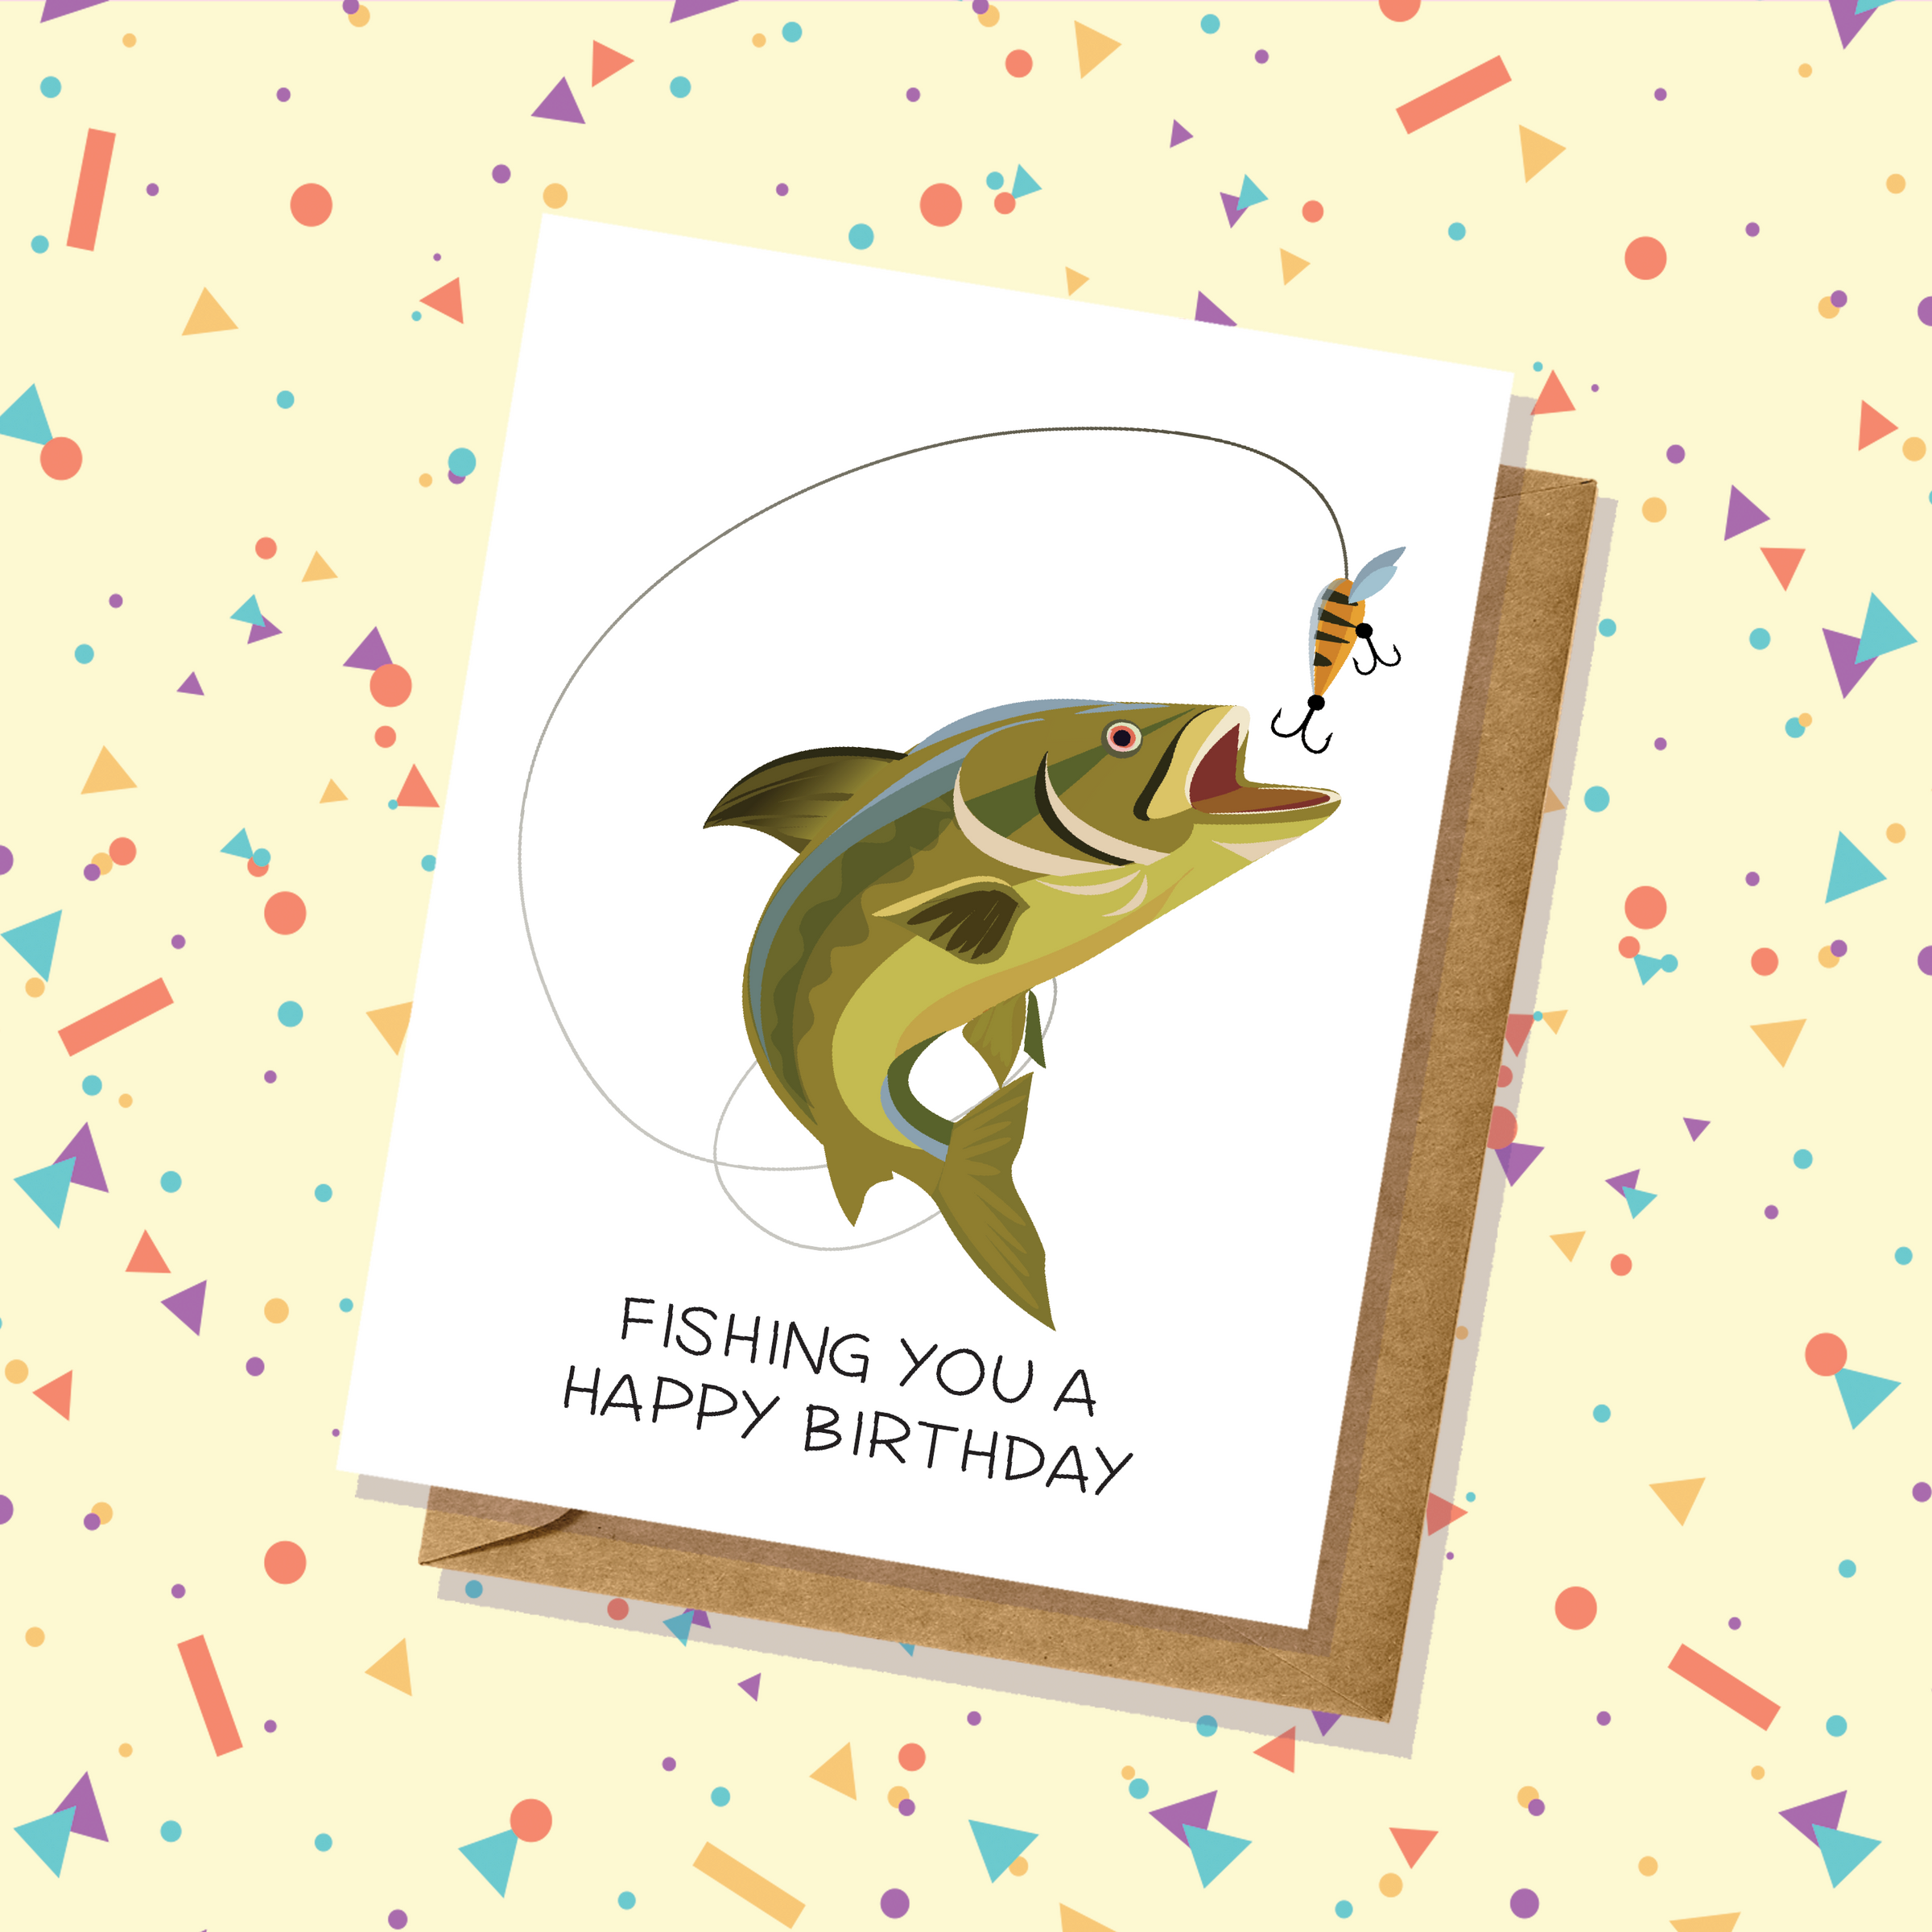 Fishing You a Happy Birthday Card